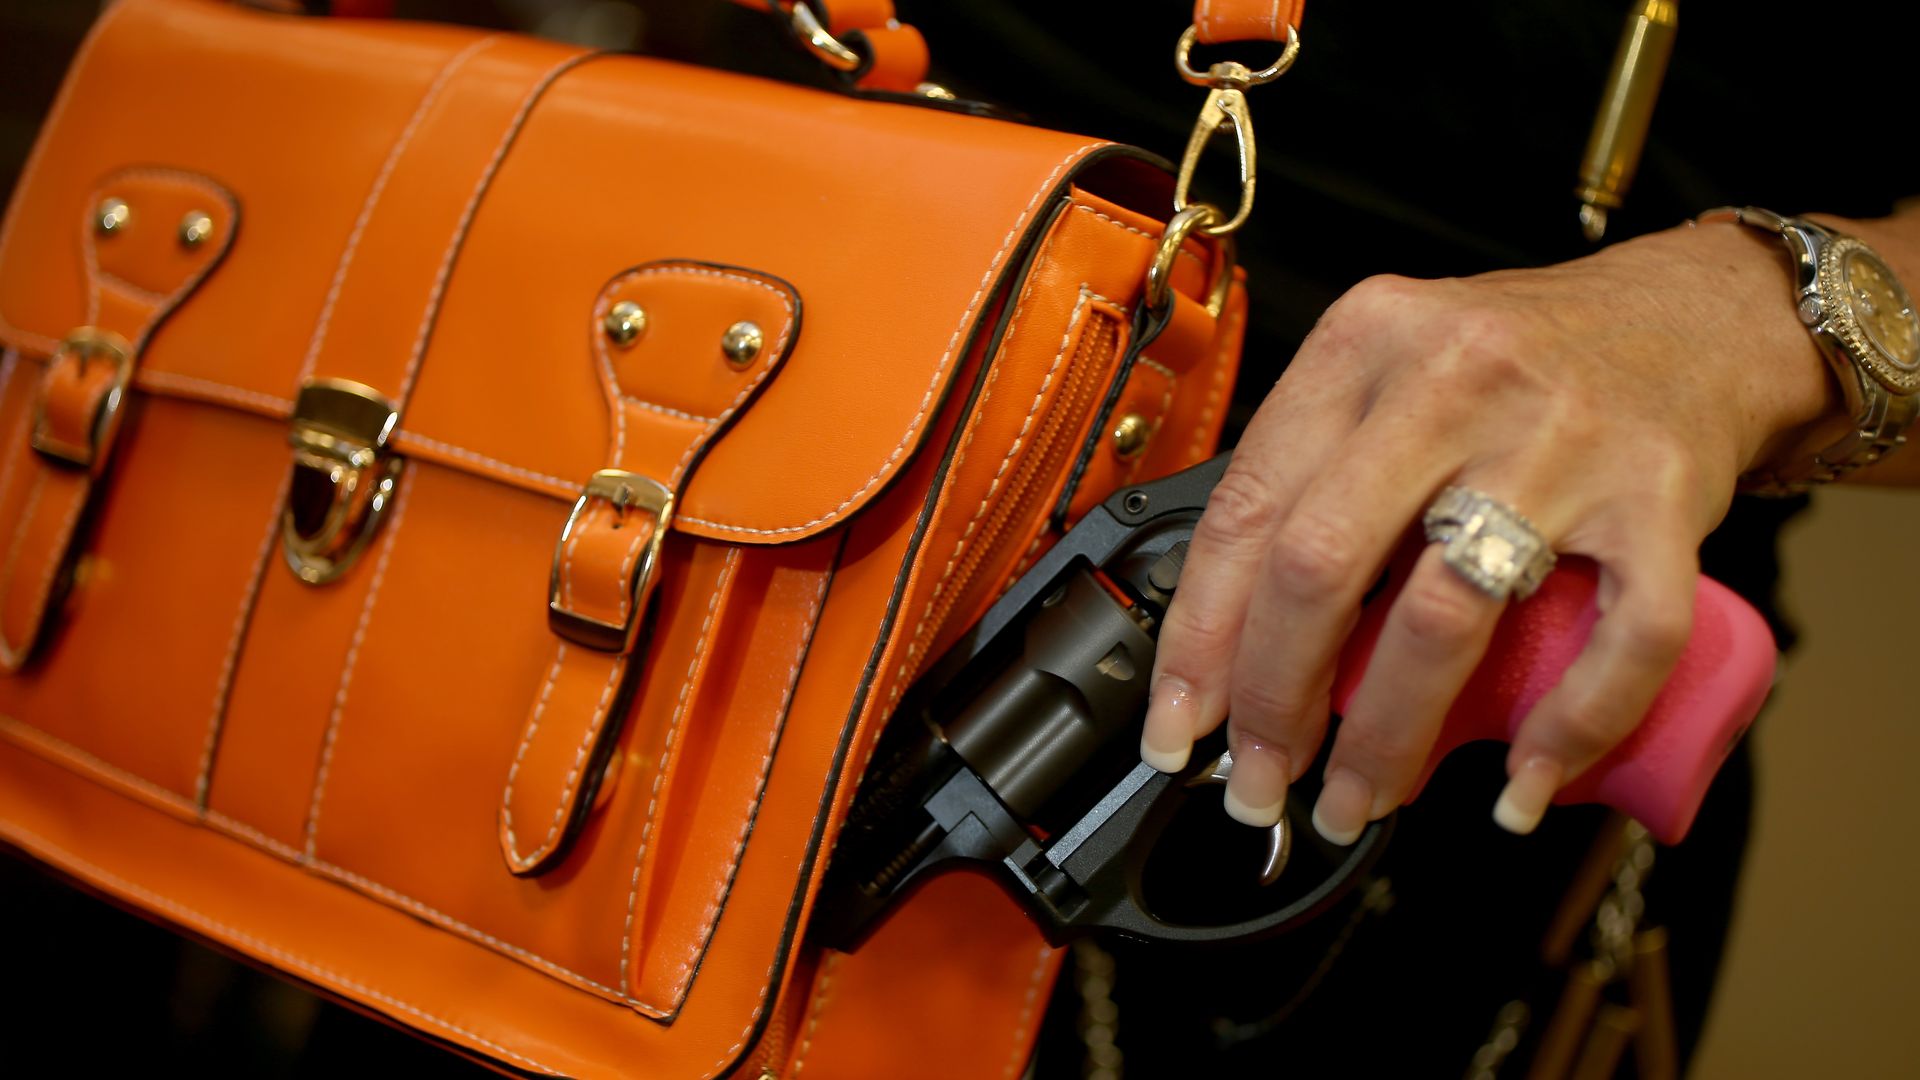 Woman holds gun next to purse.